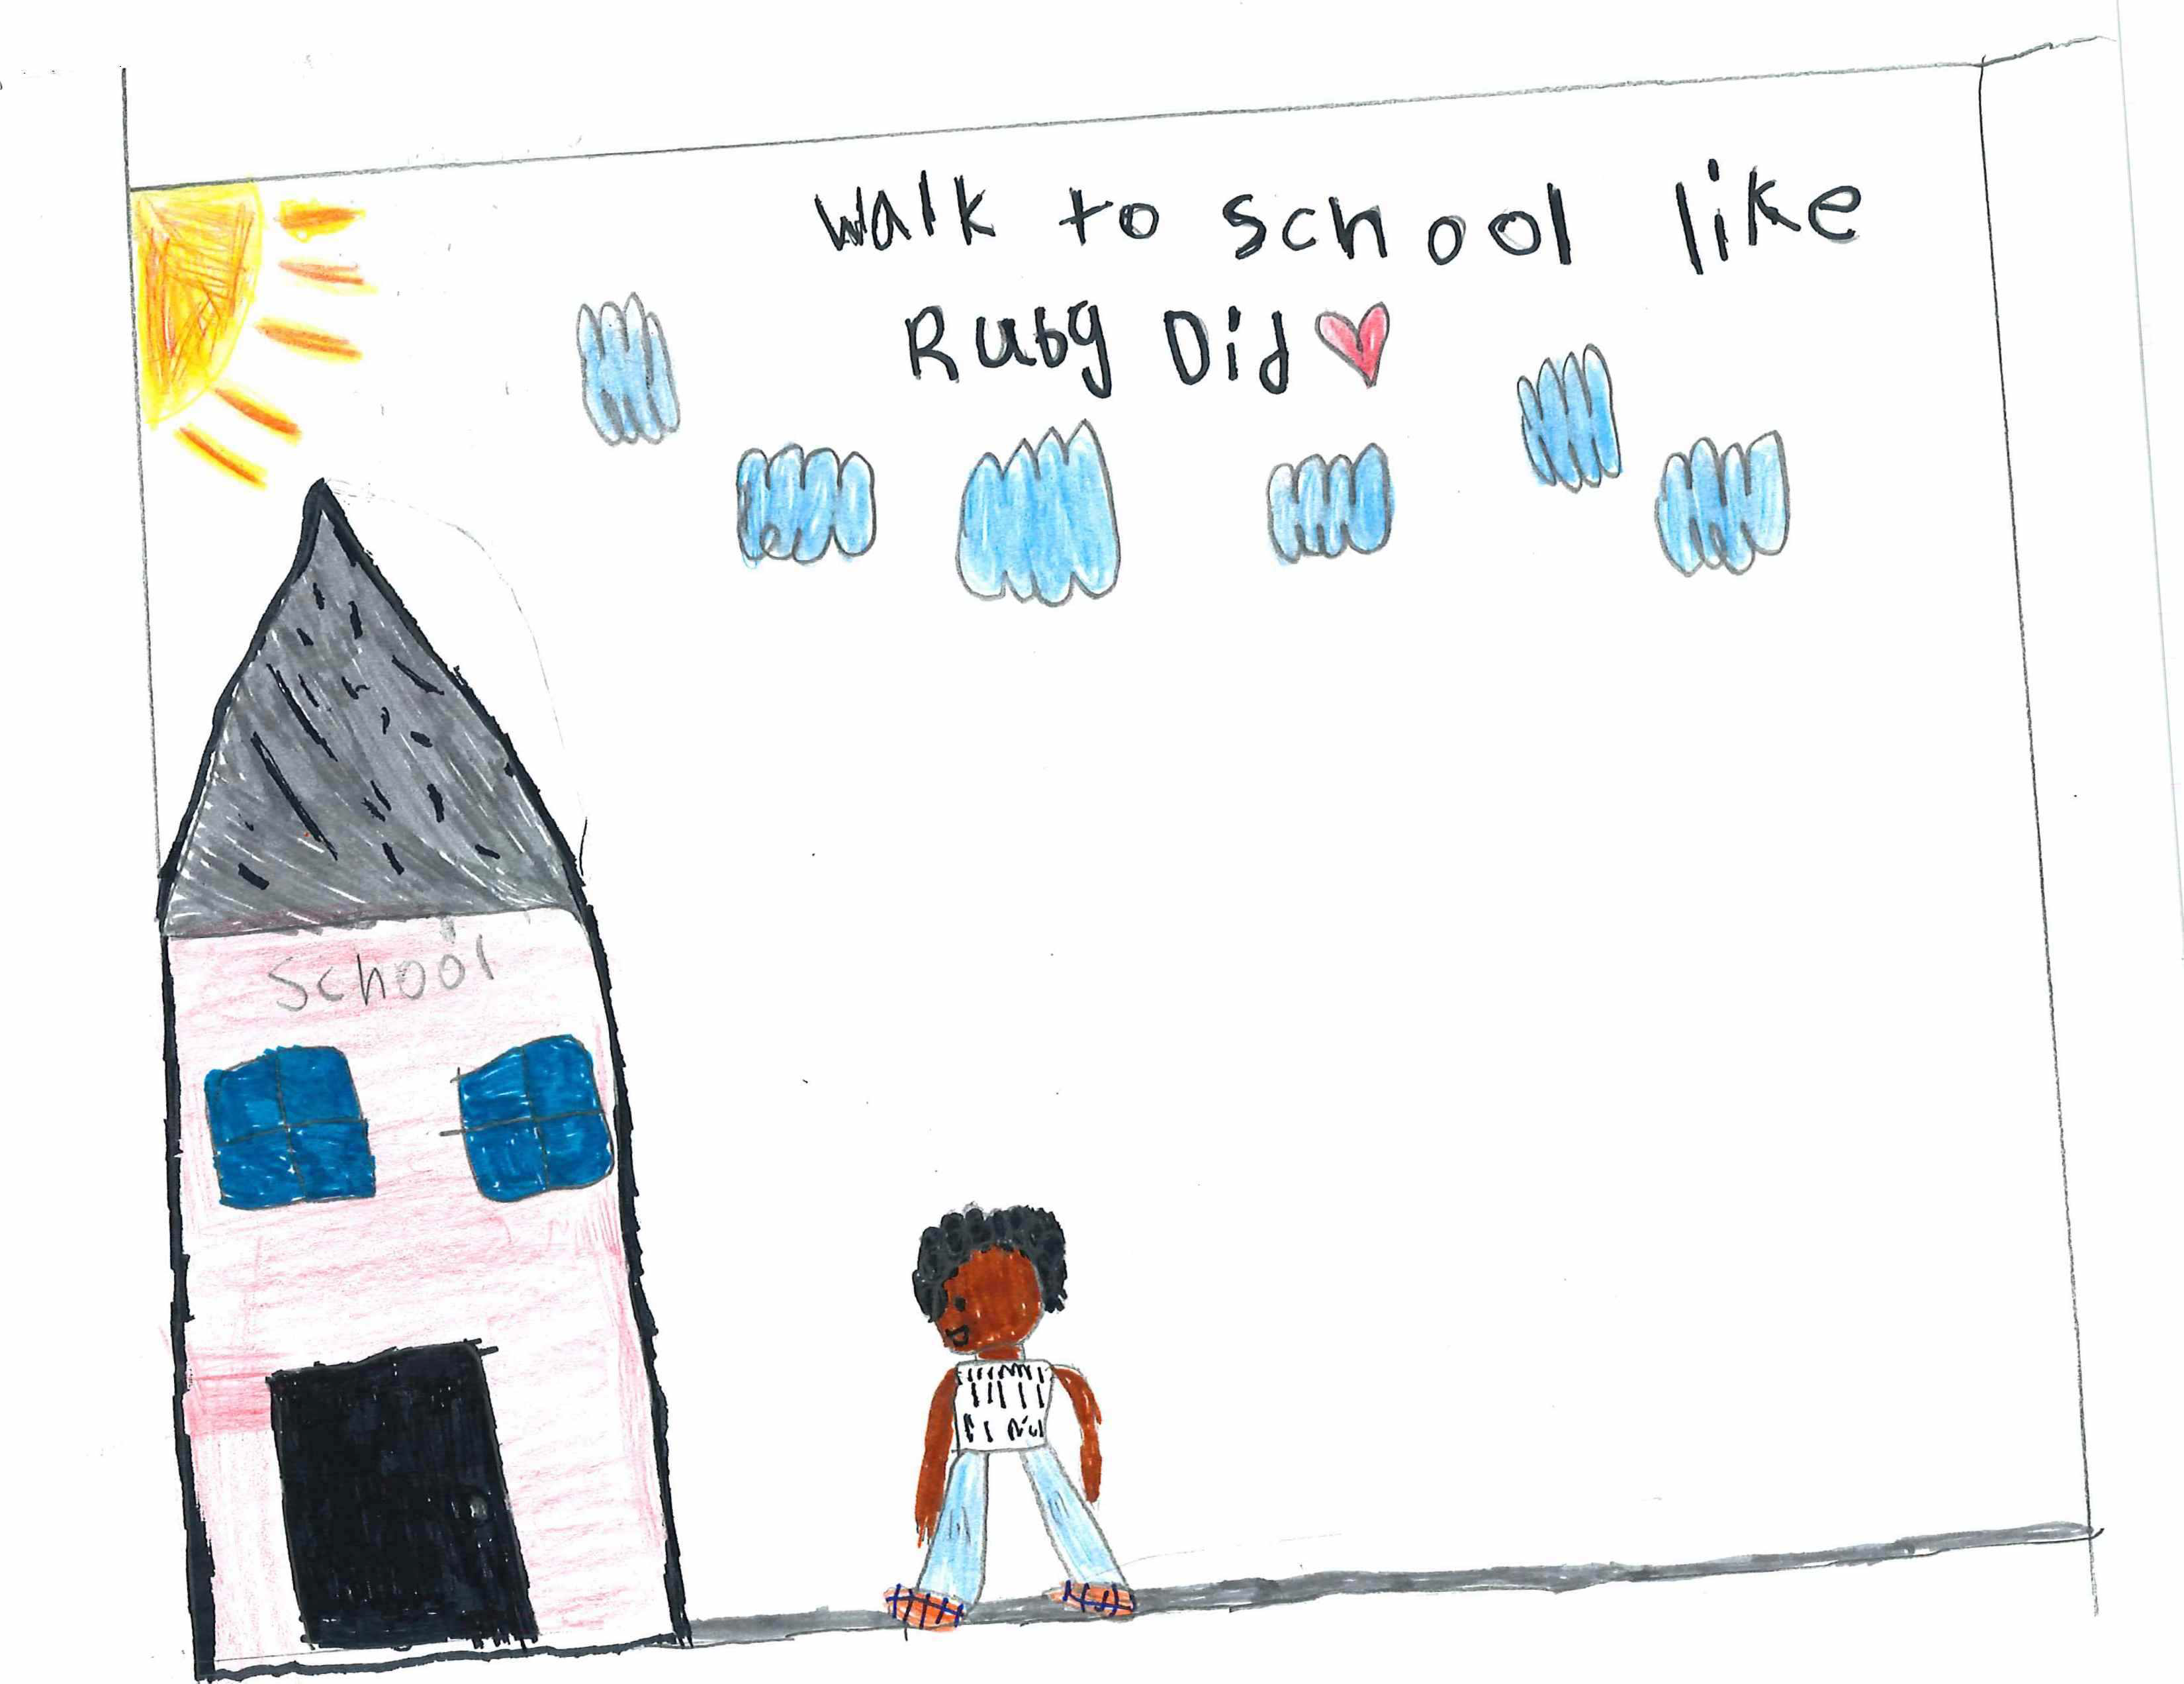 Ruby Bridges Walking to School.